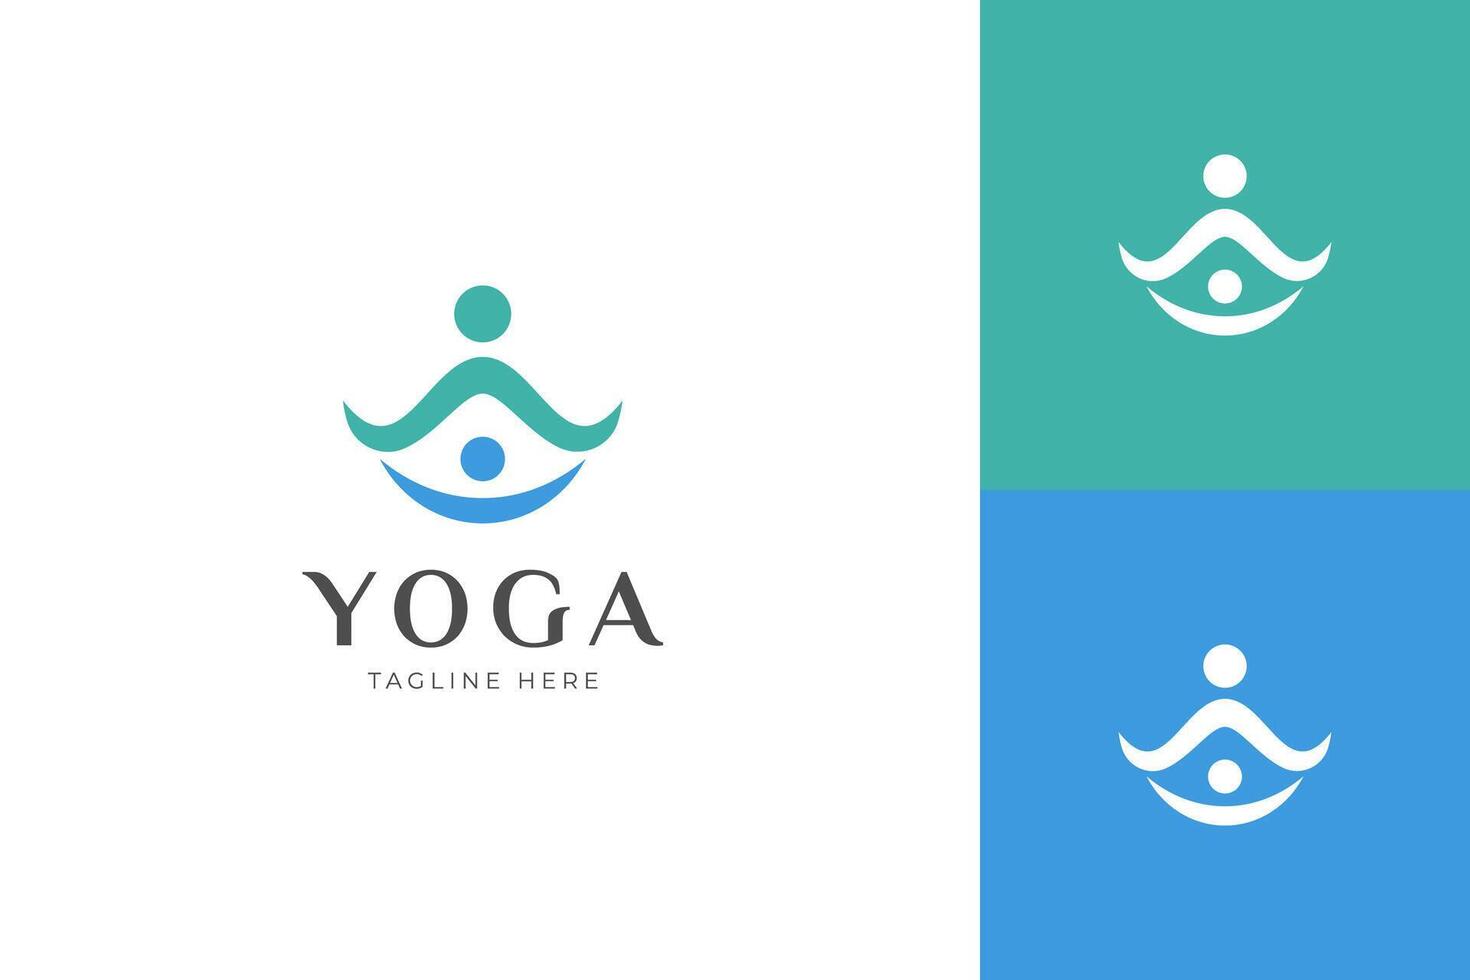 coach yoga simple logo icon design. Meditation symbol for fitness logo elements vector